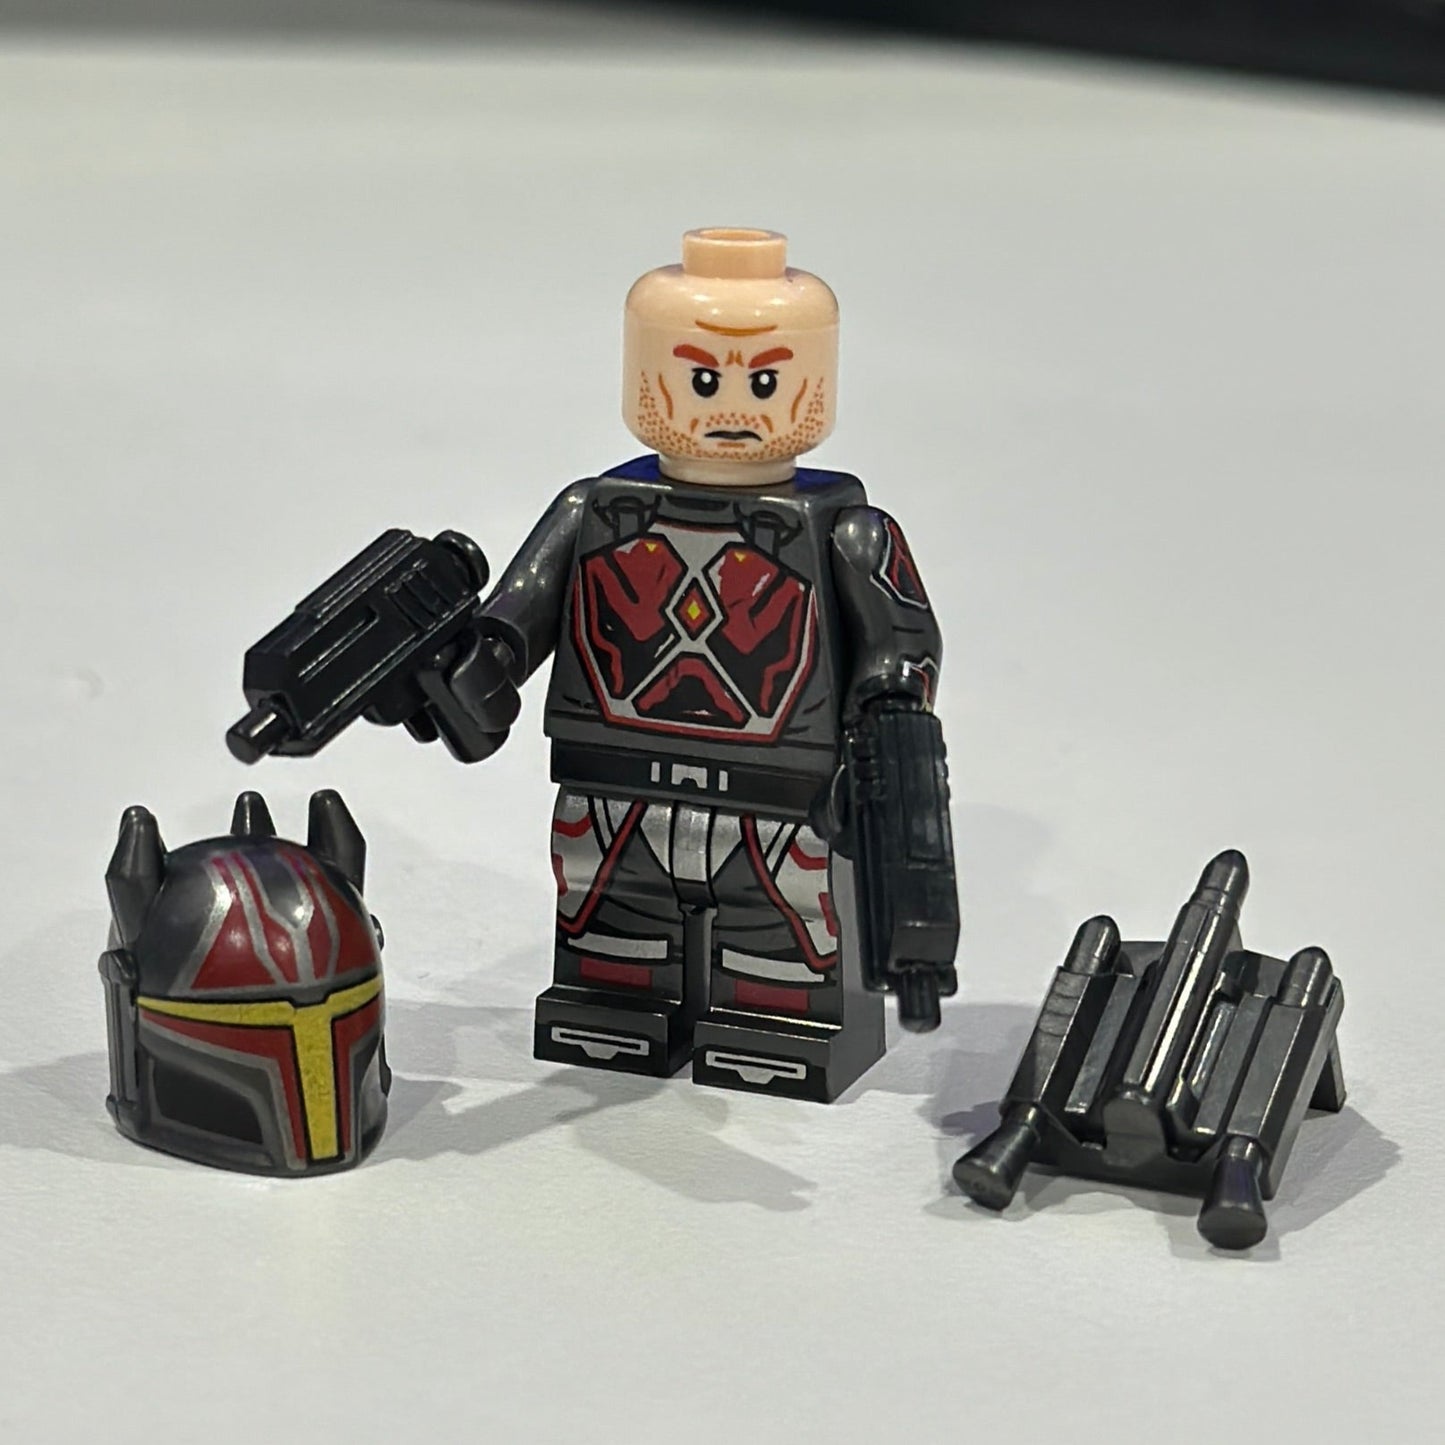 Star Wars Gar Saxon Mandalorian Minifigure